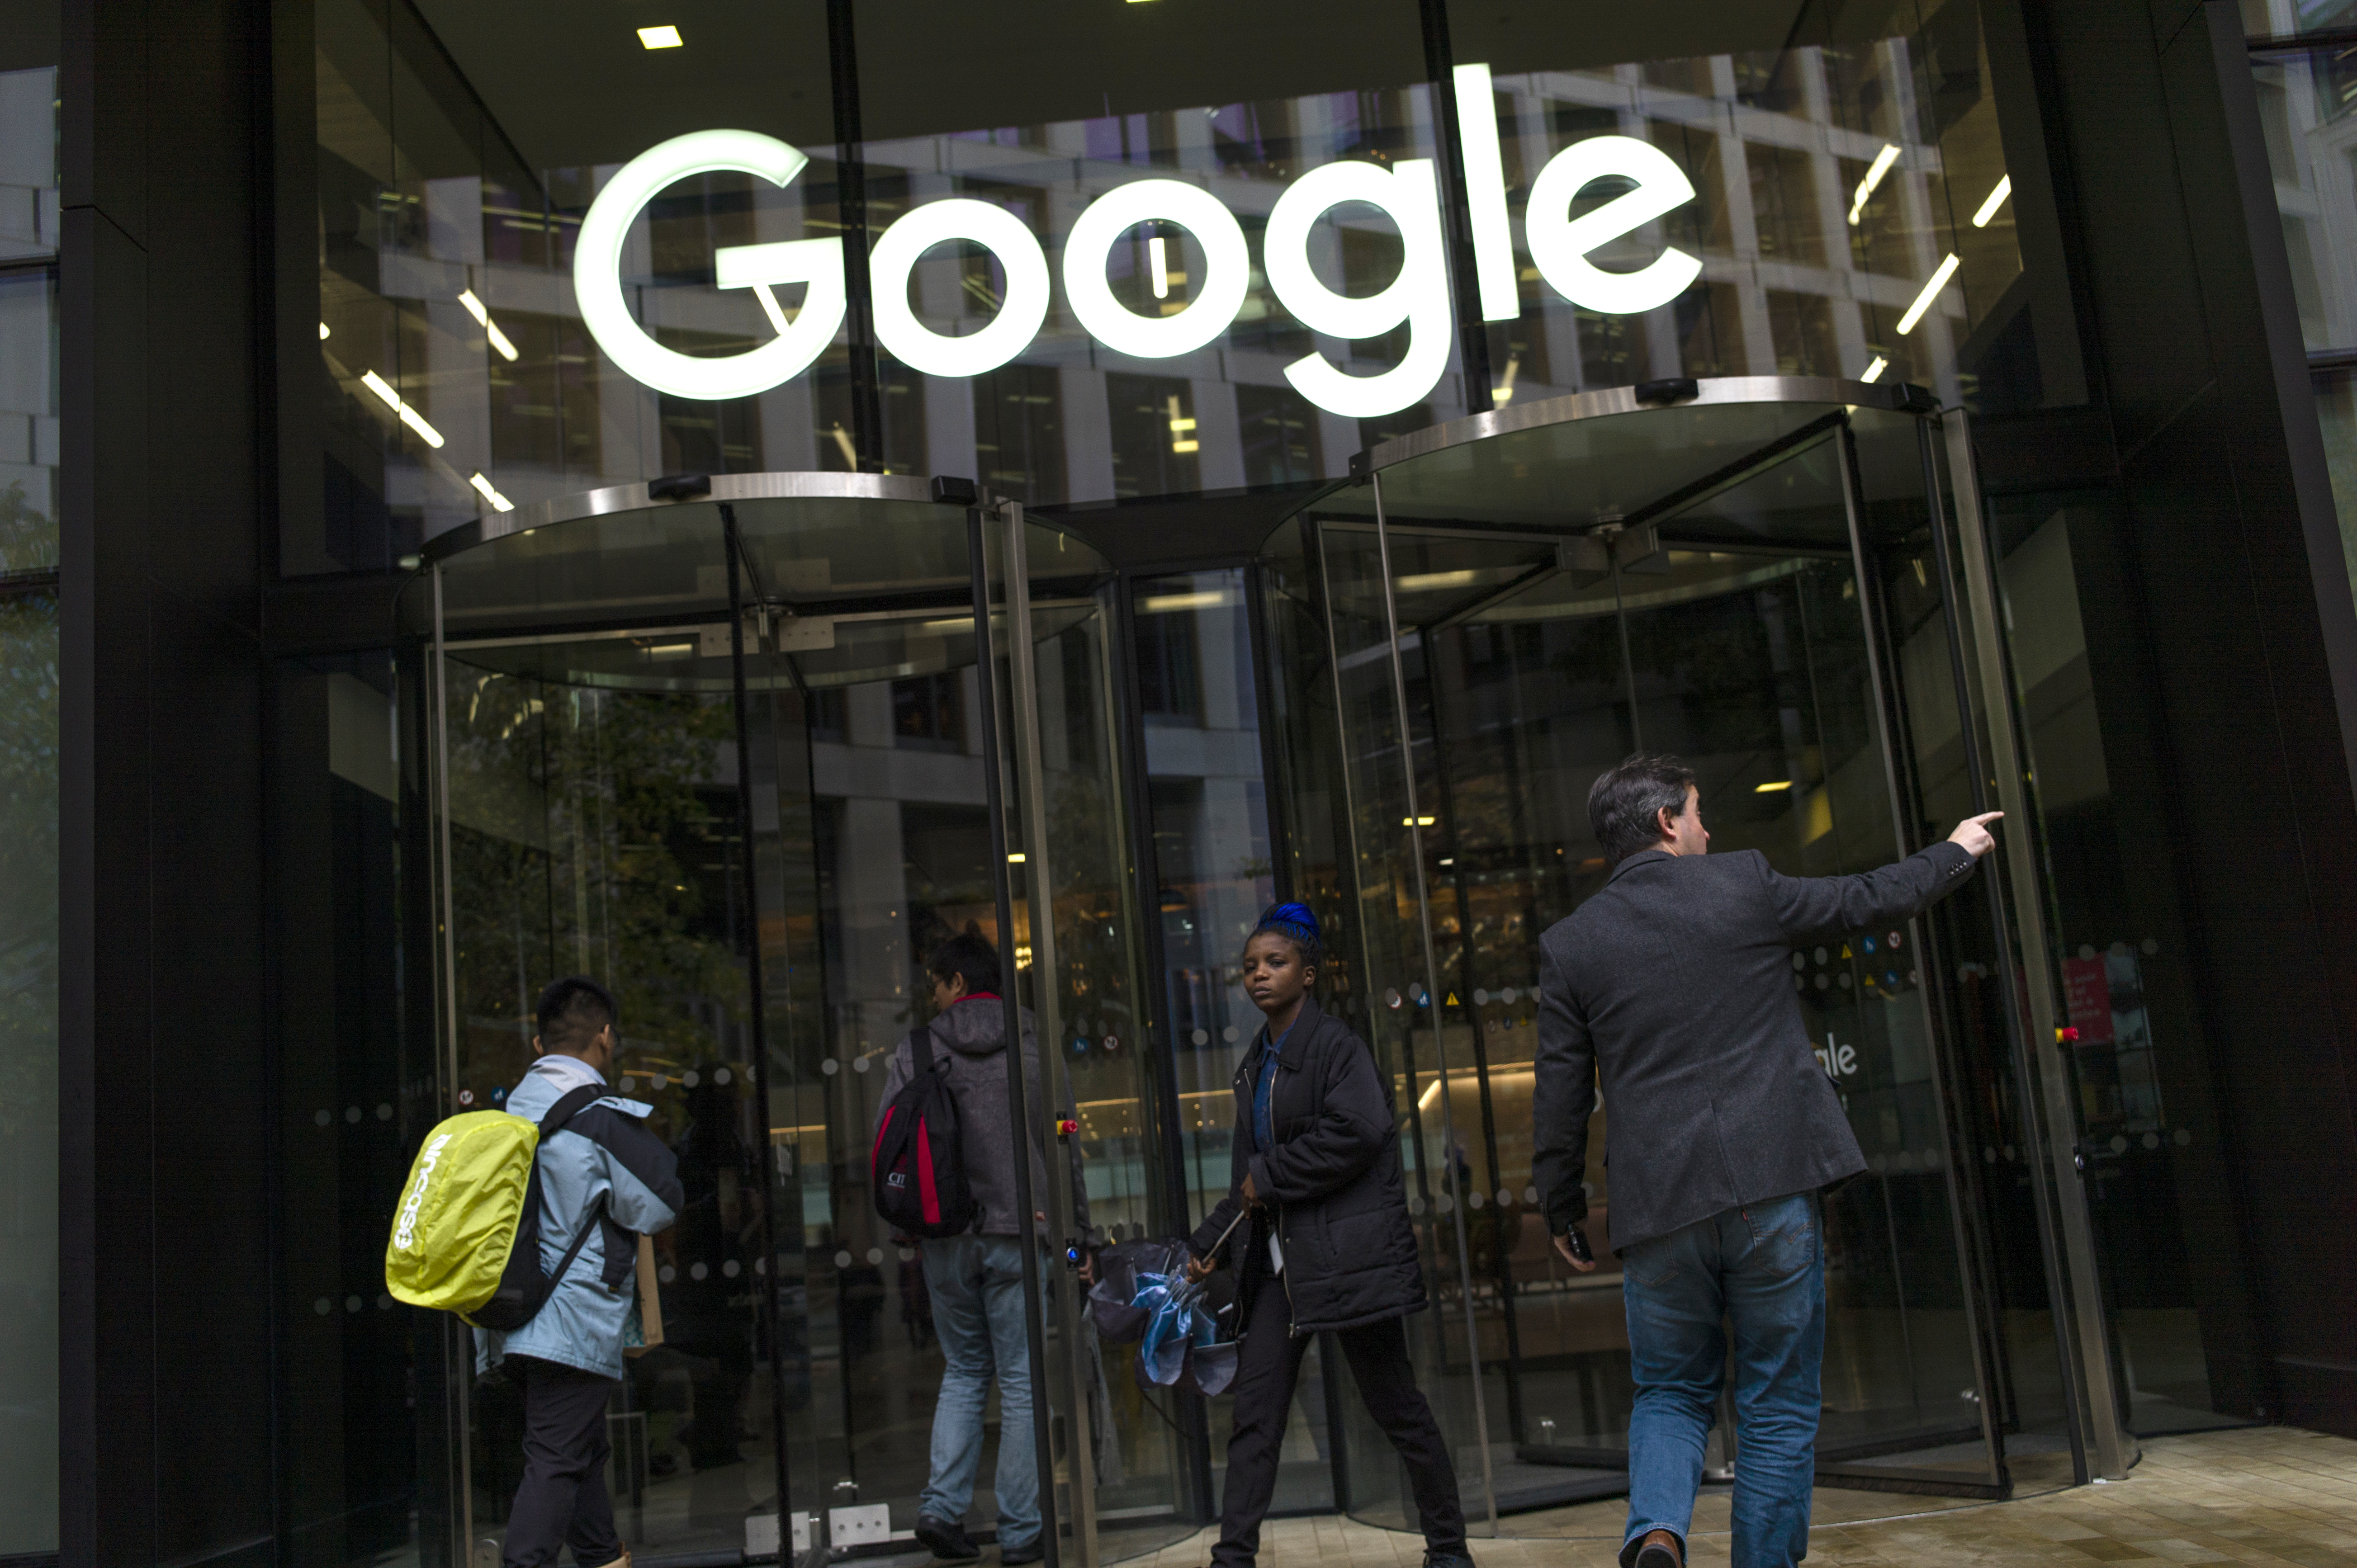 Google employees walking through a glass door under a sign reading “Google.”